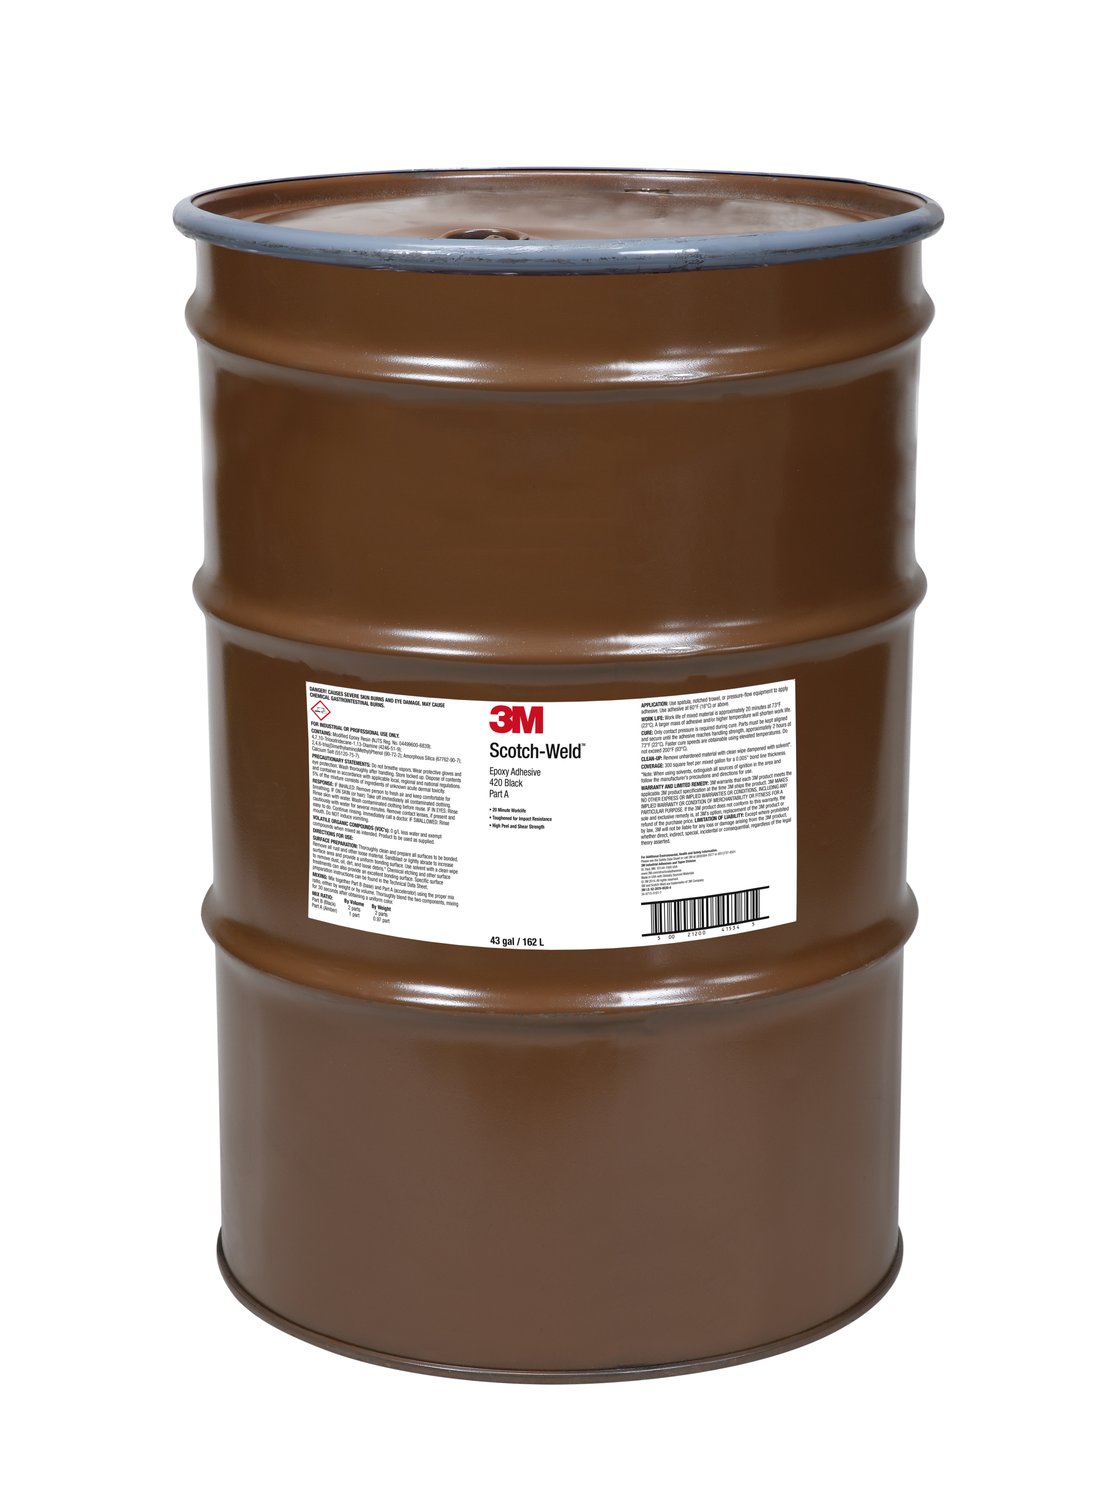 7010365967 - 3M Scotch-Weld Epoxy Adhesive 420, Black, Part A, 55 Gallon (43 Gallon
Net), Drum